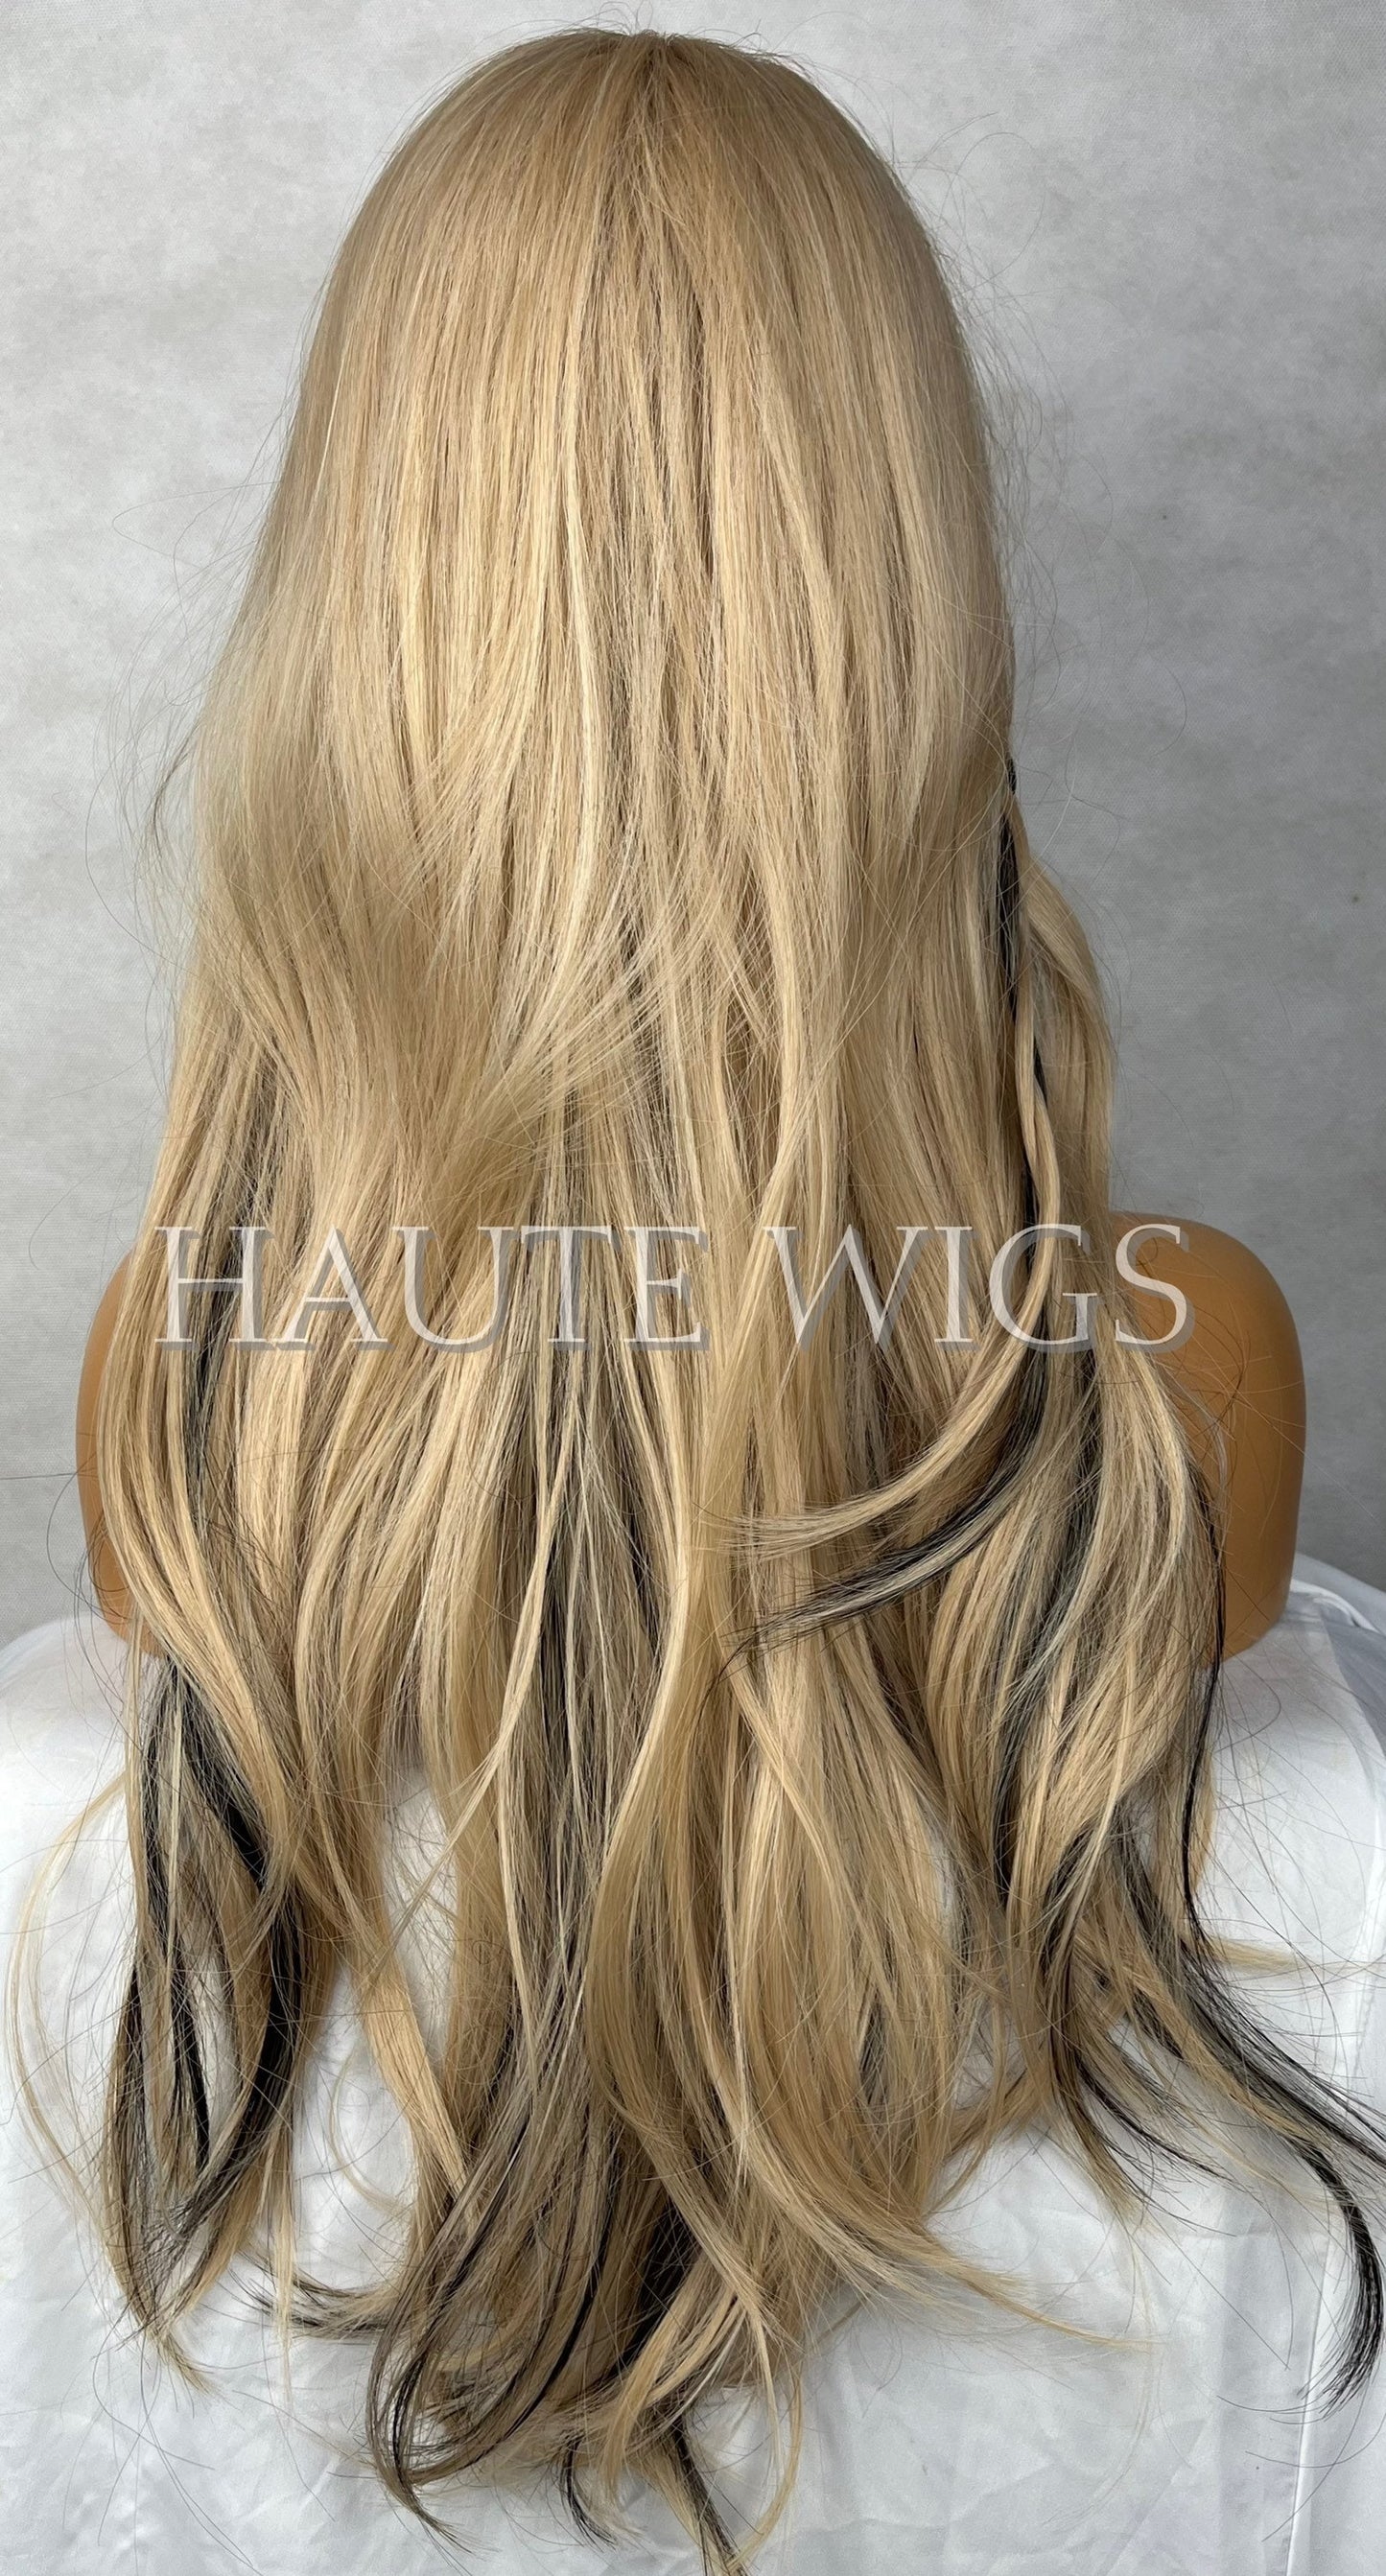 XTINA Long Sexy Blonde Wig W. Black Highlights Lowlights Womens Hair Fringe Bangs Wavy Layered Christina Aguilera Dirrty inspired hair